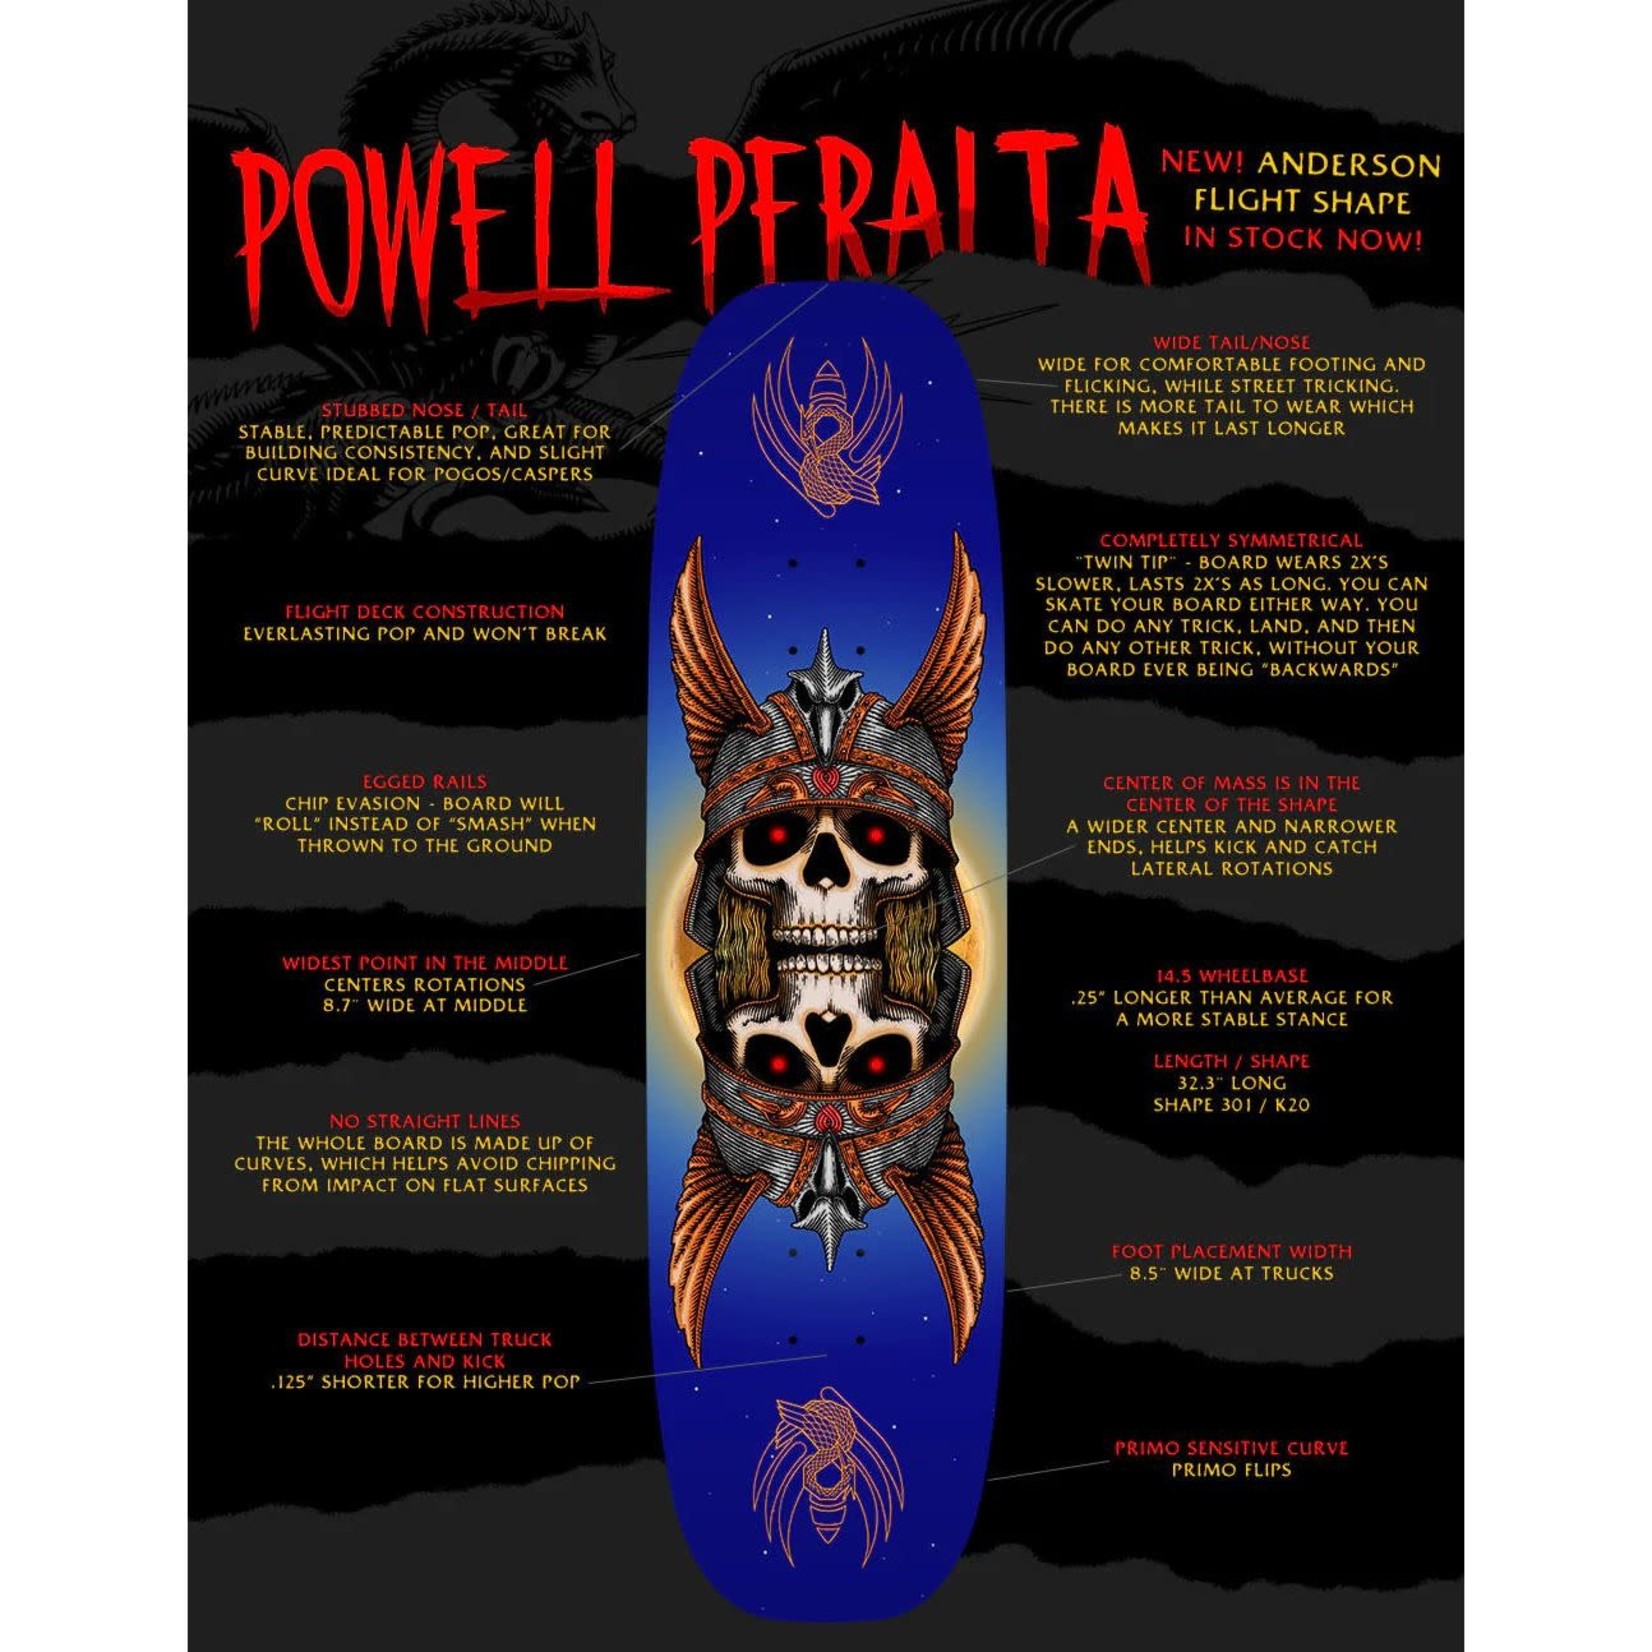 Powell Peralta Powell Peralta Pro Anderson Heron 2 Flight Egg Deck - 8.7"x 32.3" K20 301